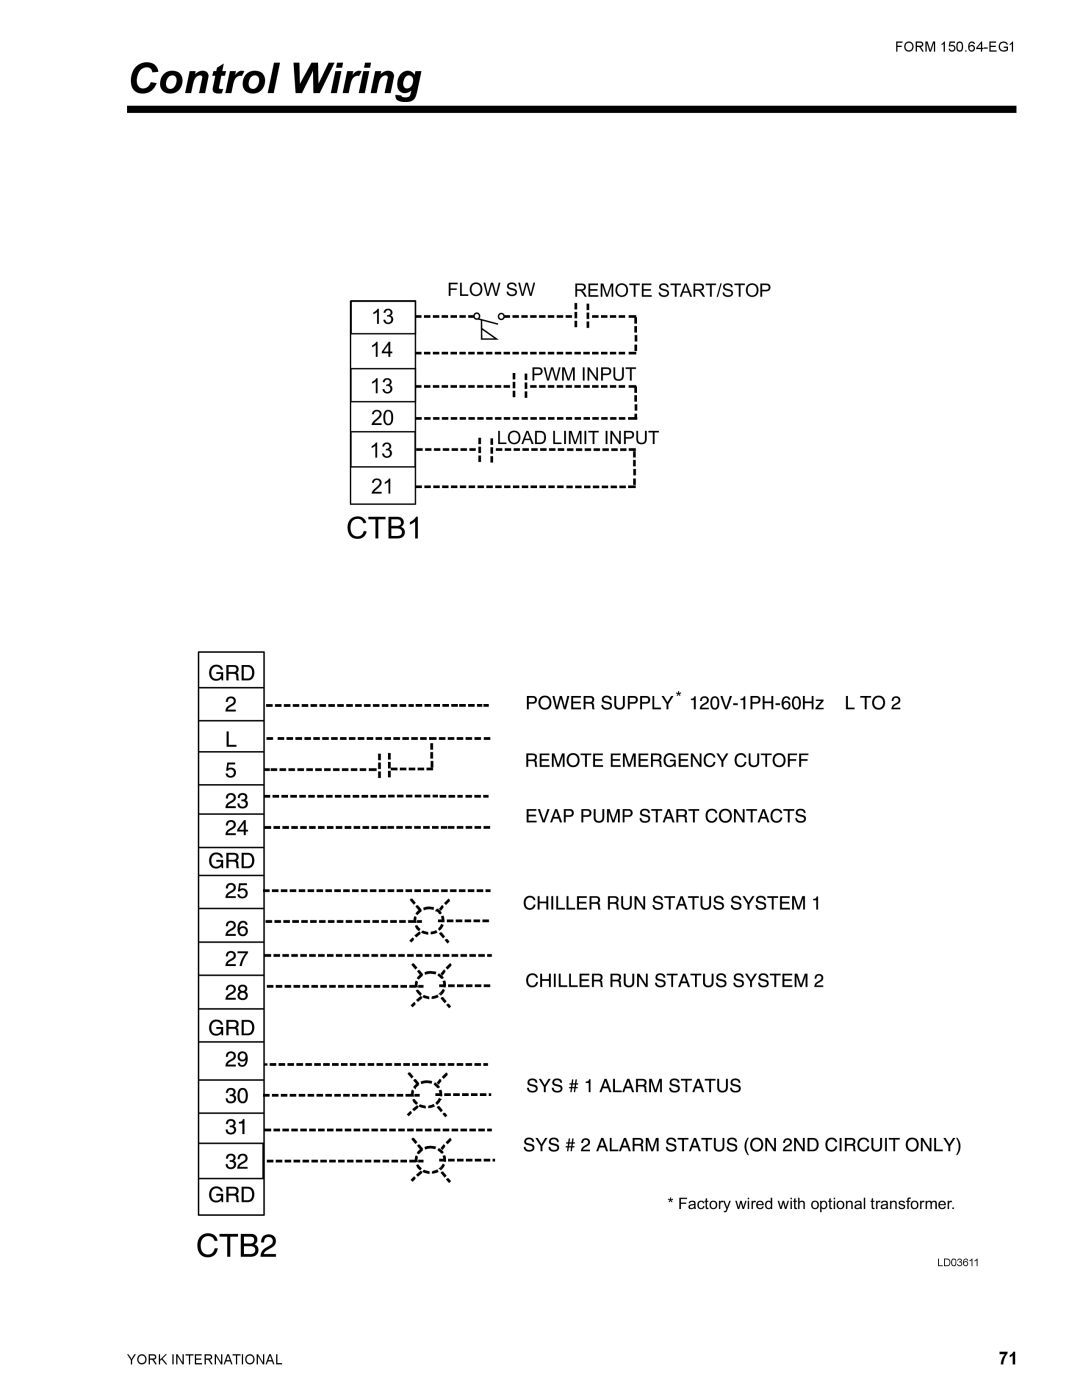 York YCAL0065, YCAL0041 manual Control Wiring, CTB1, Flow Sw Remote Start/Stop, Pwm Input Load Limit Input 